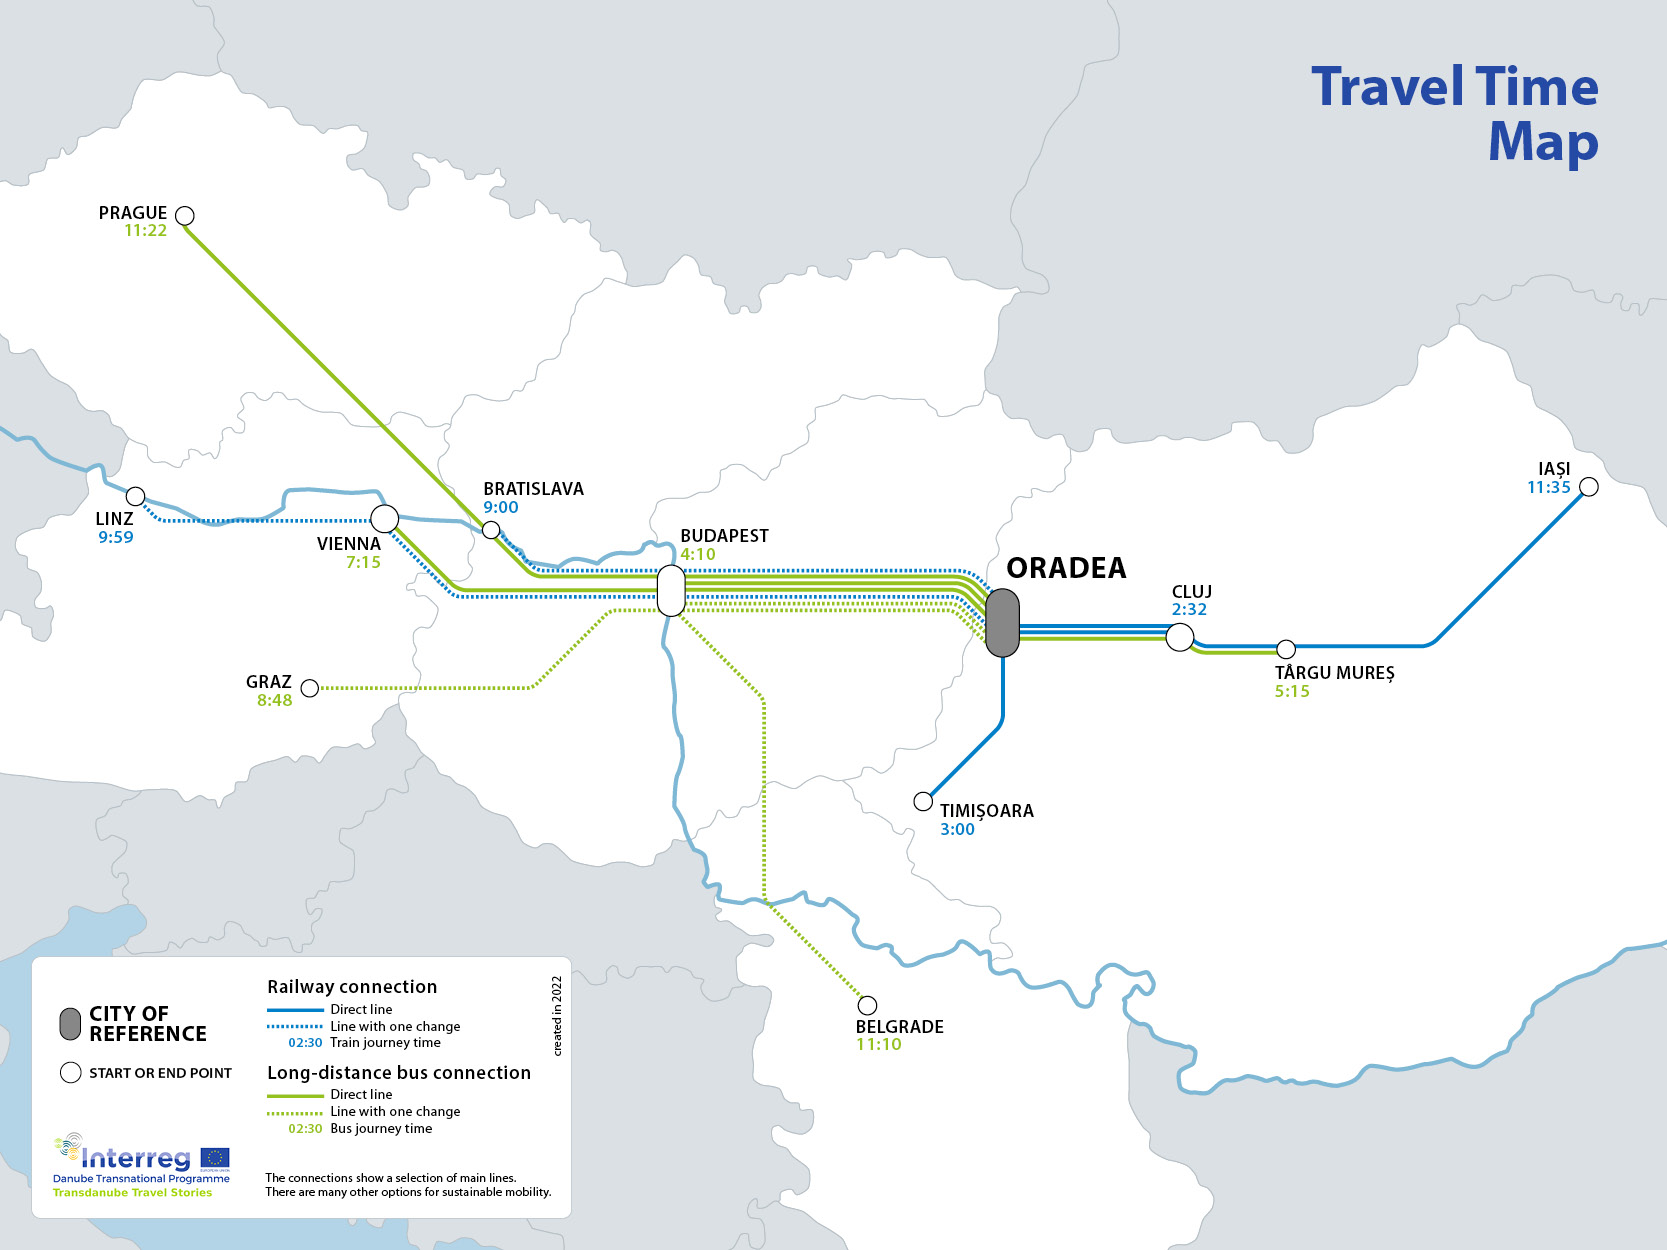 Travel Time Map - Oradea (Vergrößerte Ansicht)